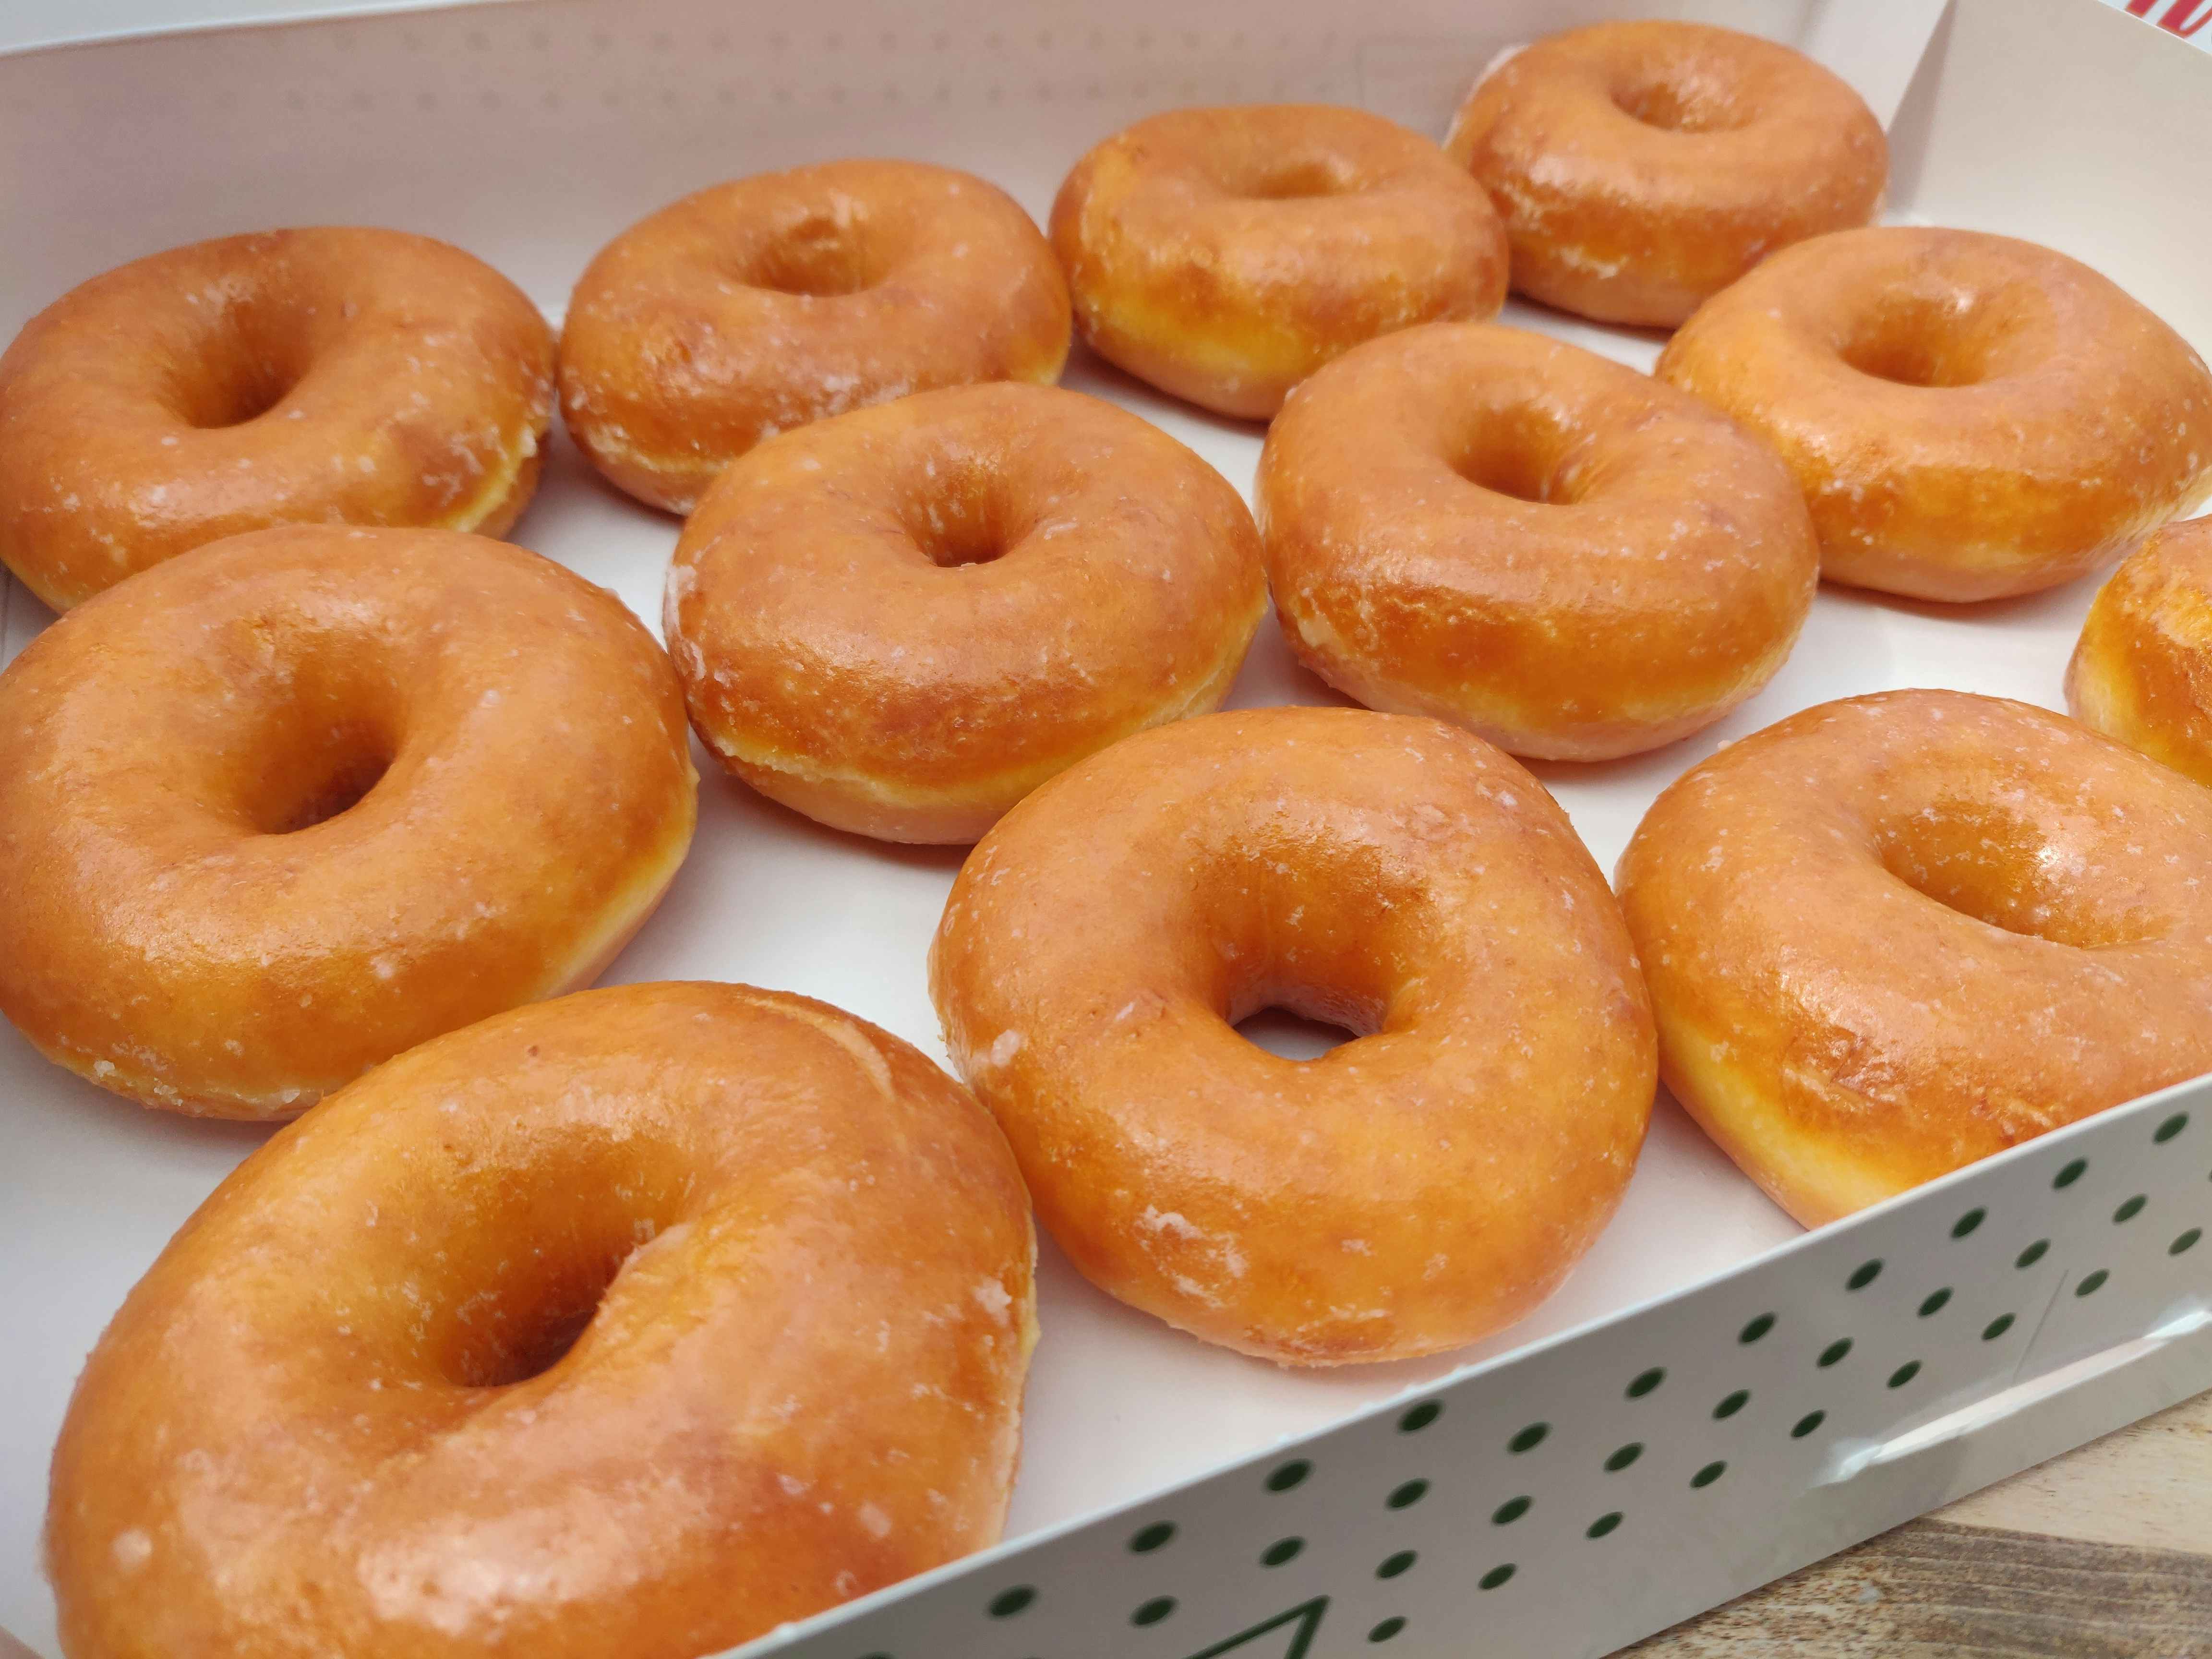 A dozen Krispy Kreme Original Glazed doughnuts in a box.